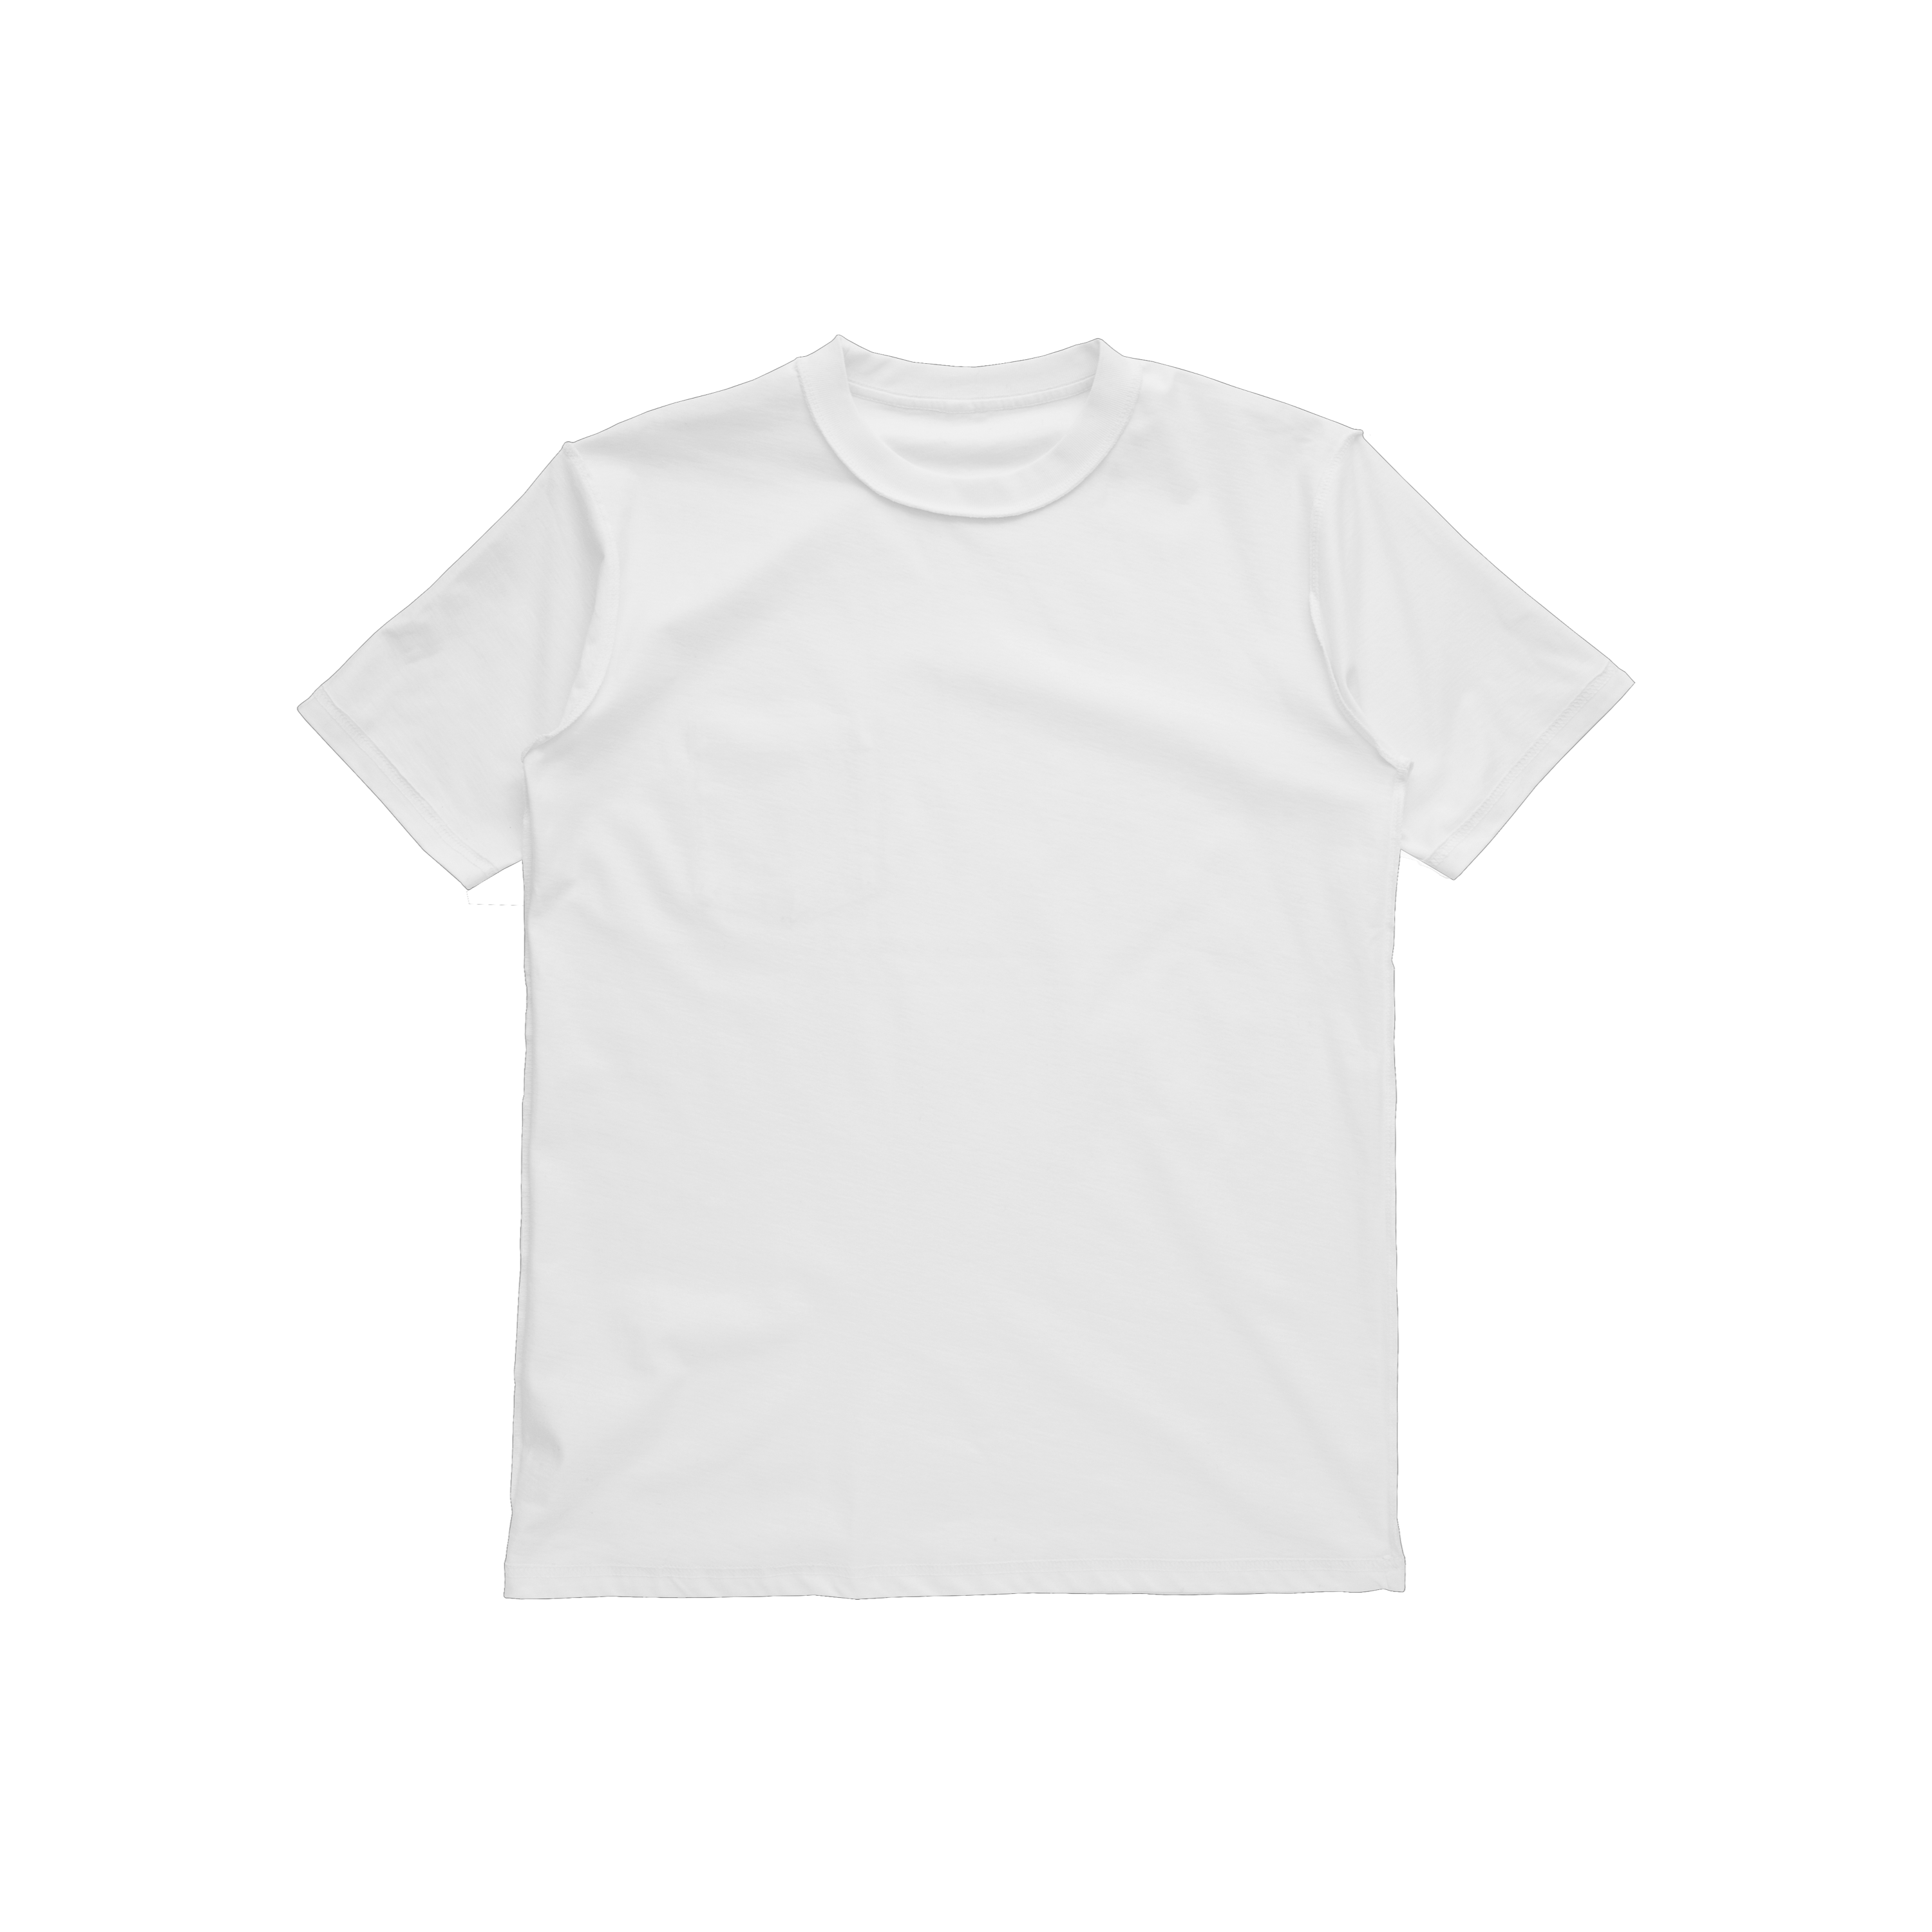 Reverse Weave T-Shirt Mockup